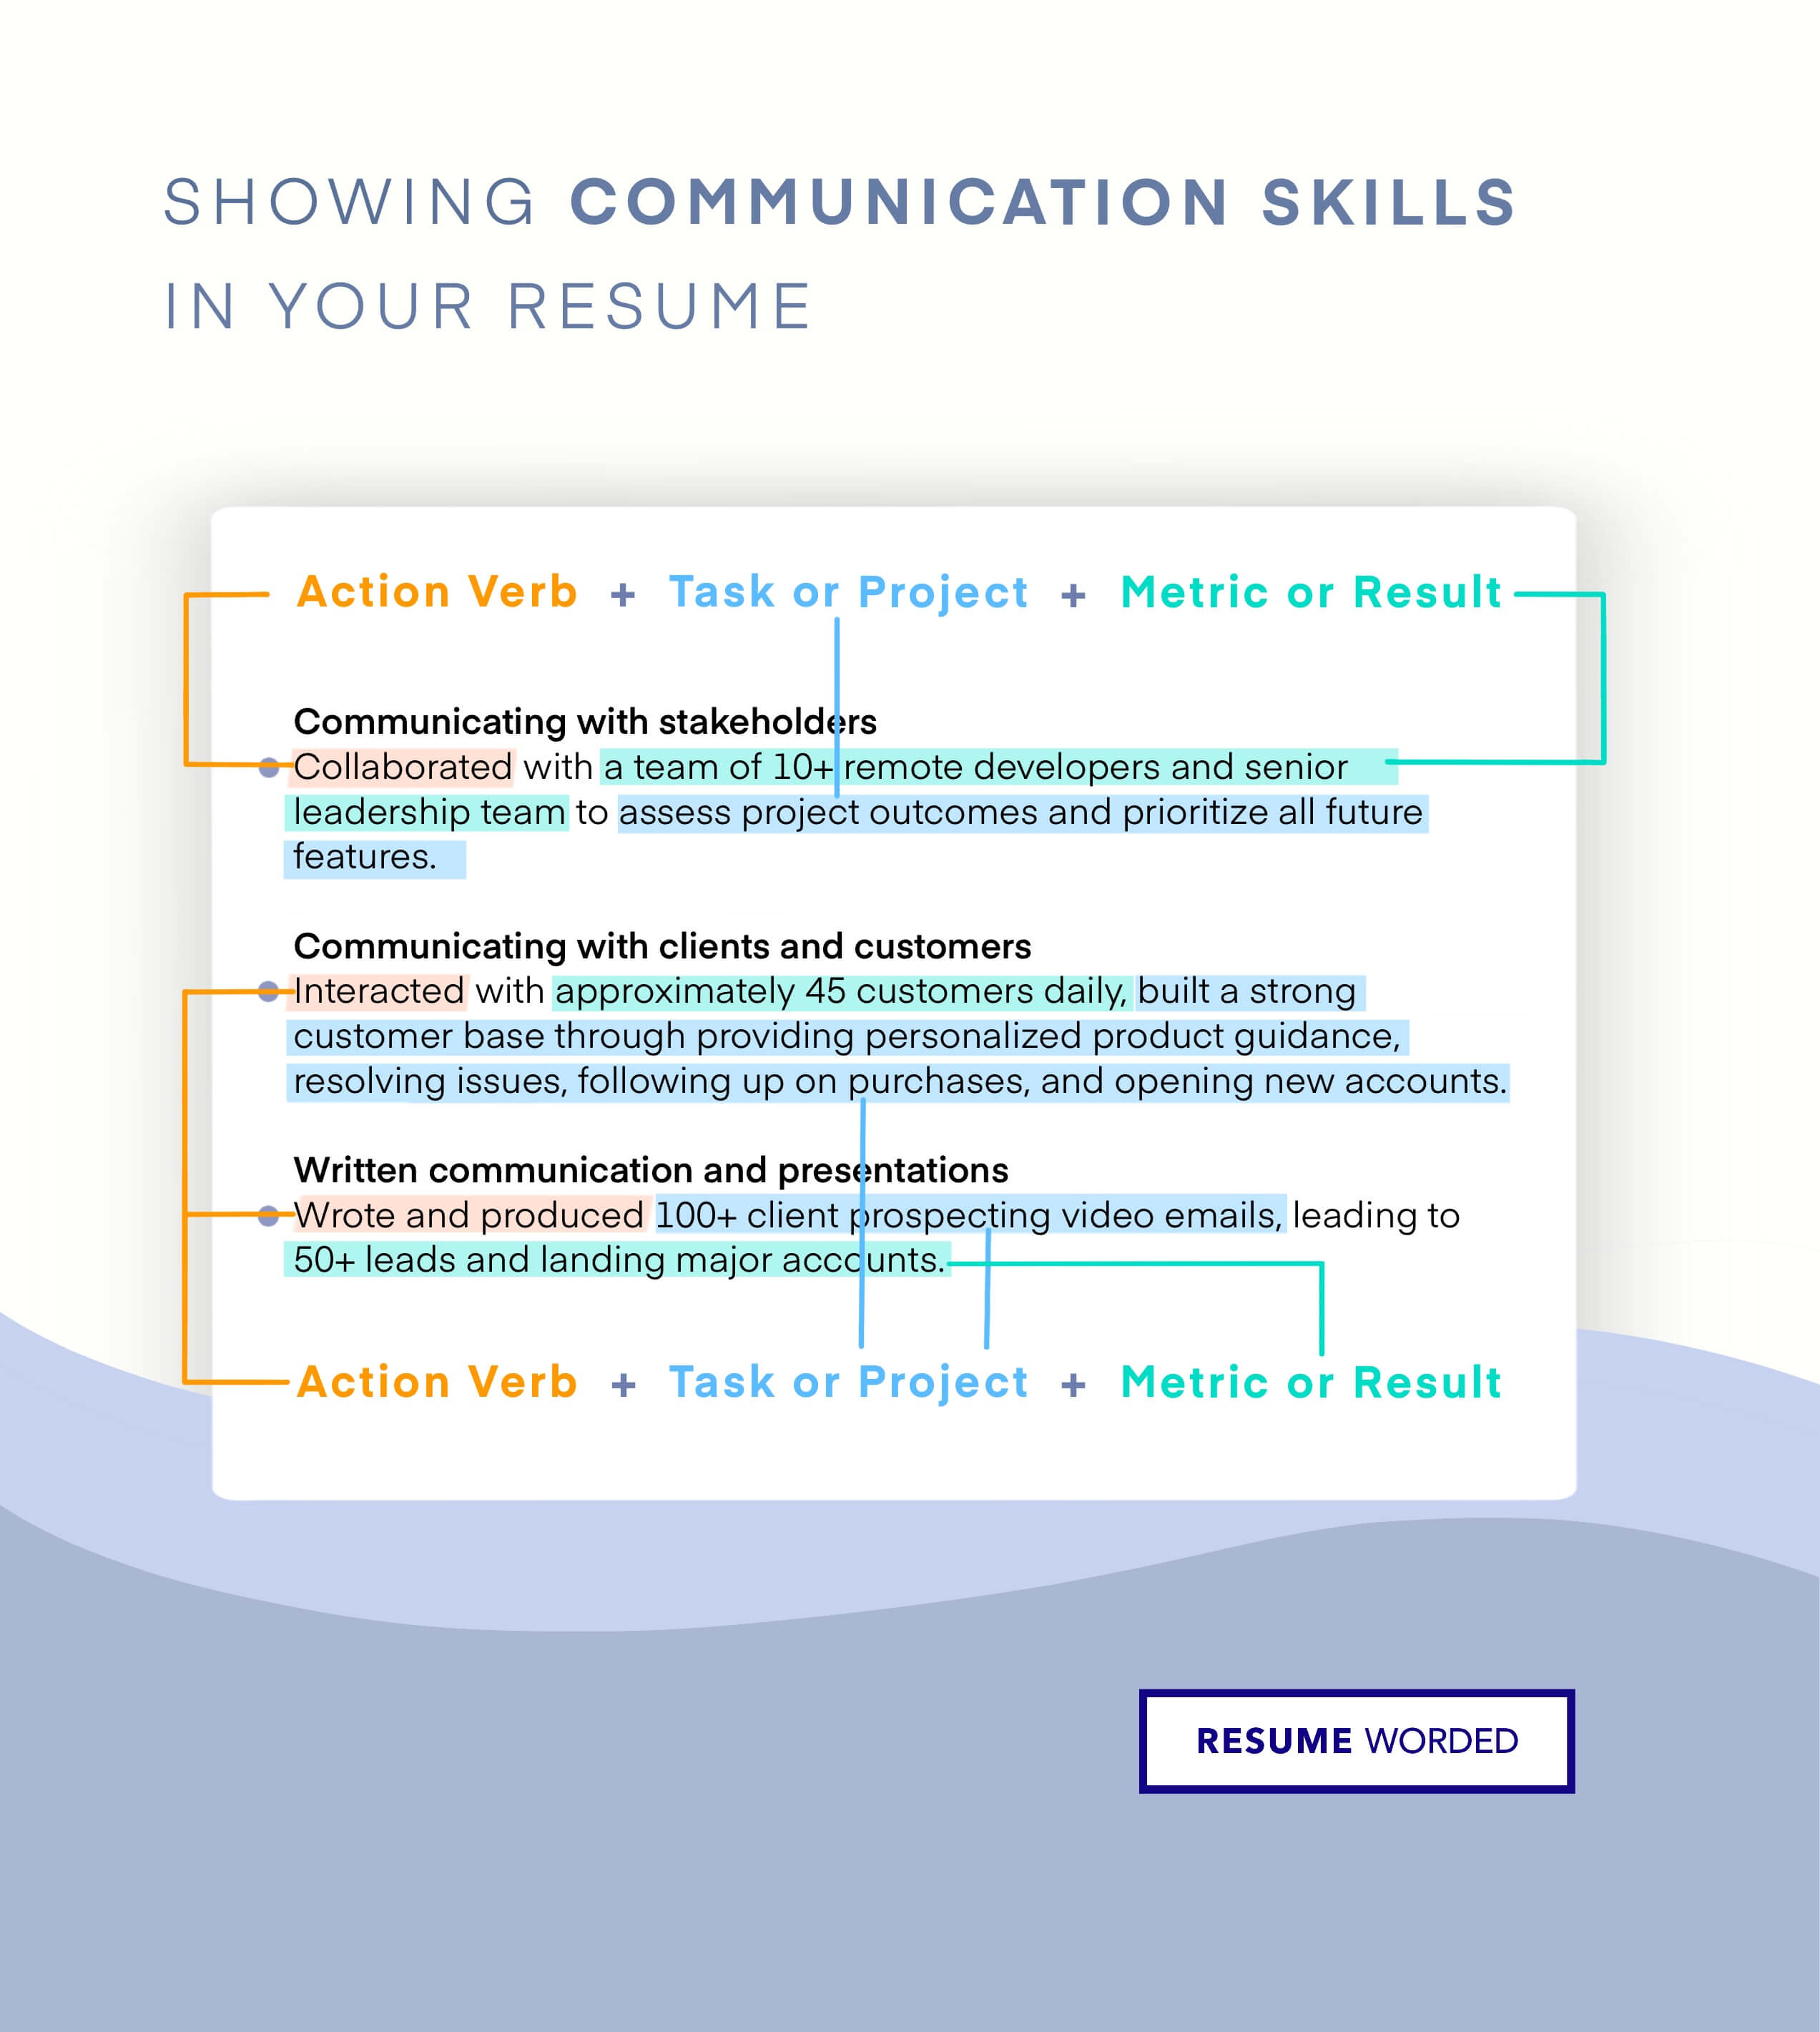 Showcase your Communication skills - Staff Accountant CV